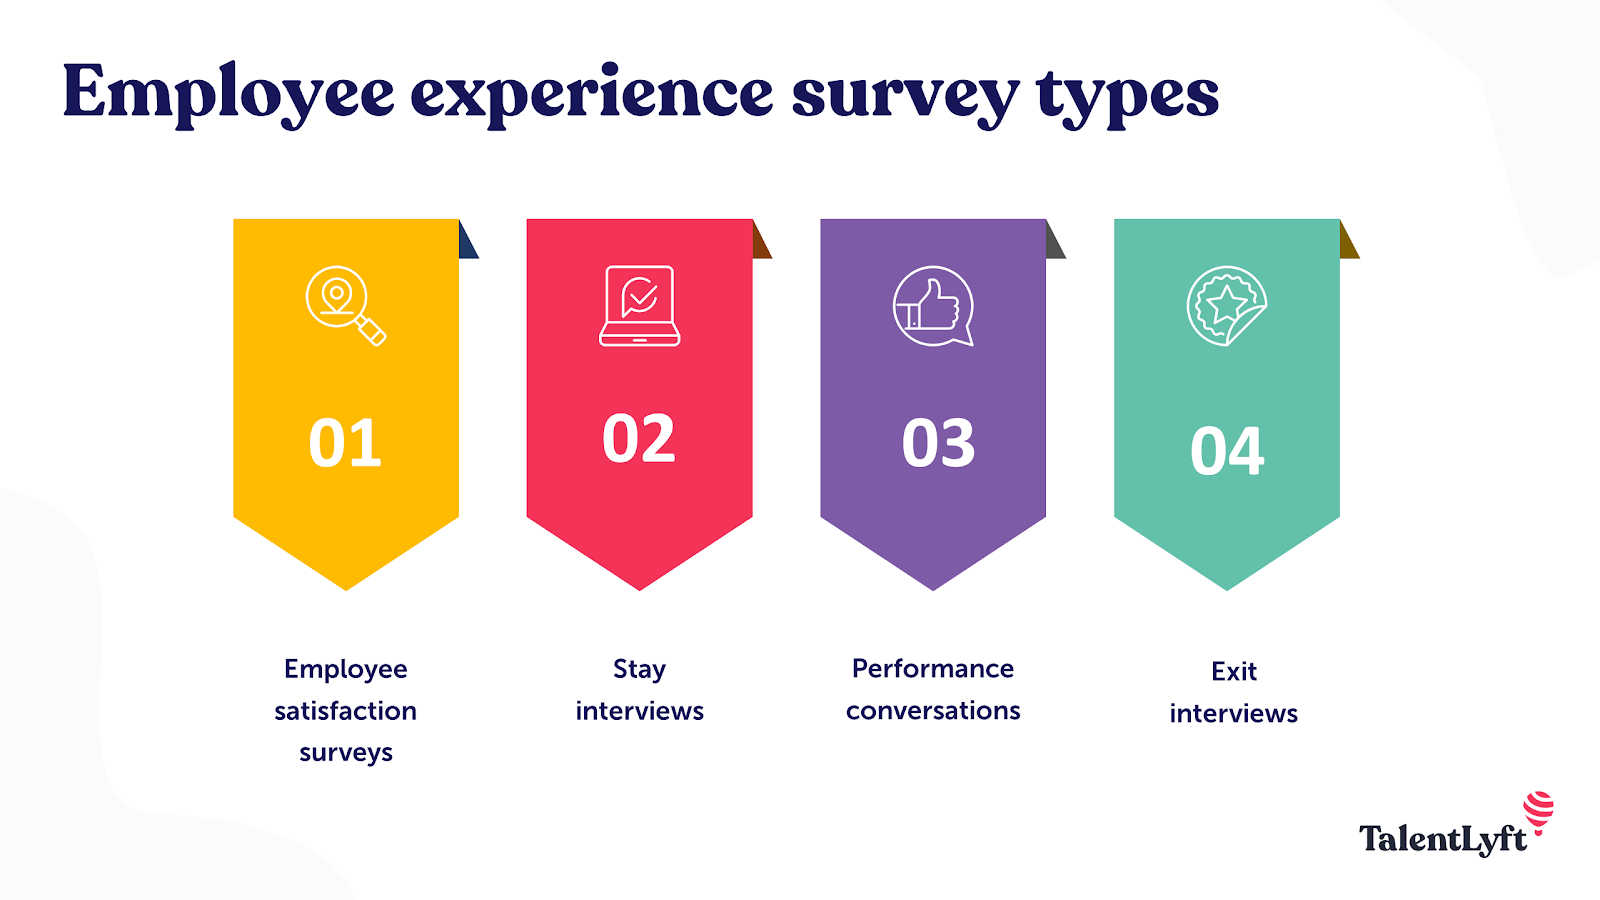 Employee experience survey types